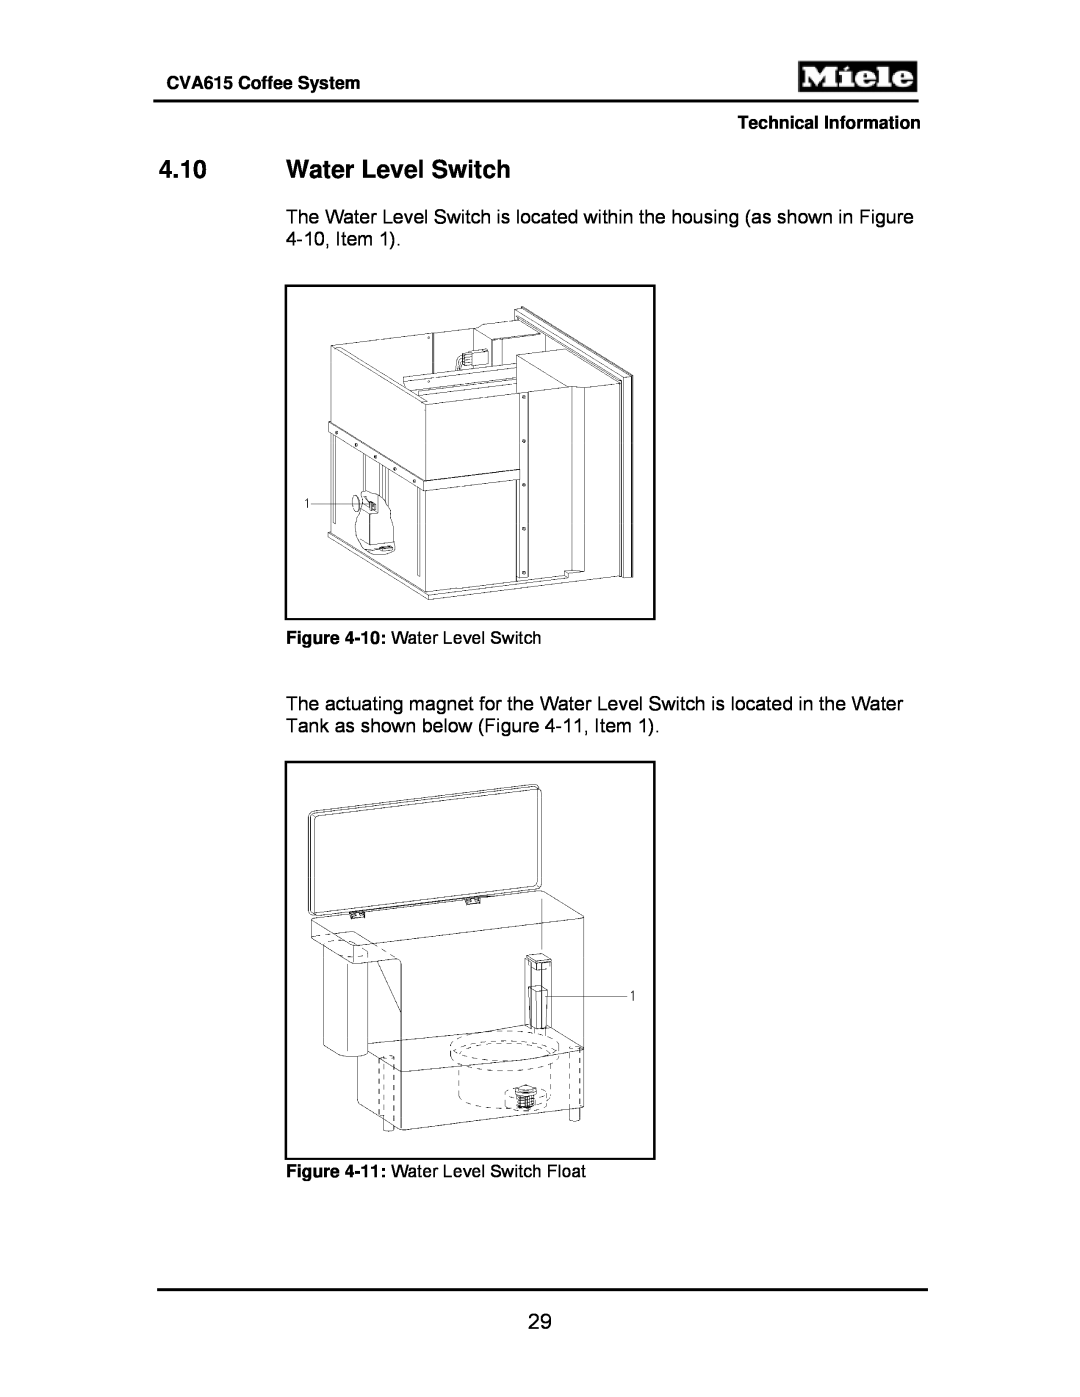 Miele CVA615 manual 4.10Water Level Switch, 10: Water Level Switch, 11: Water Level Switch Float 